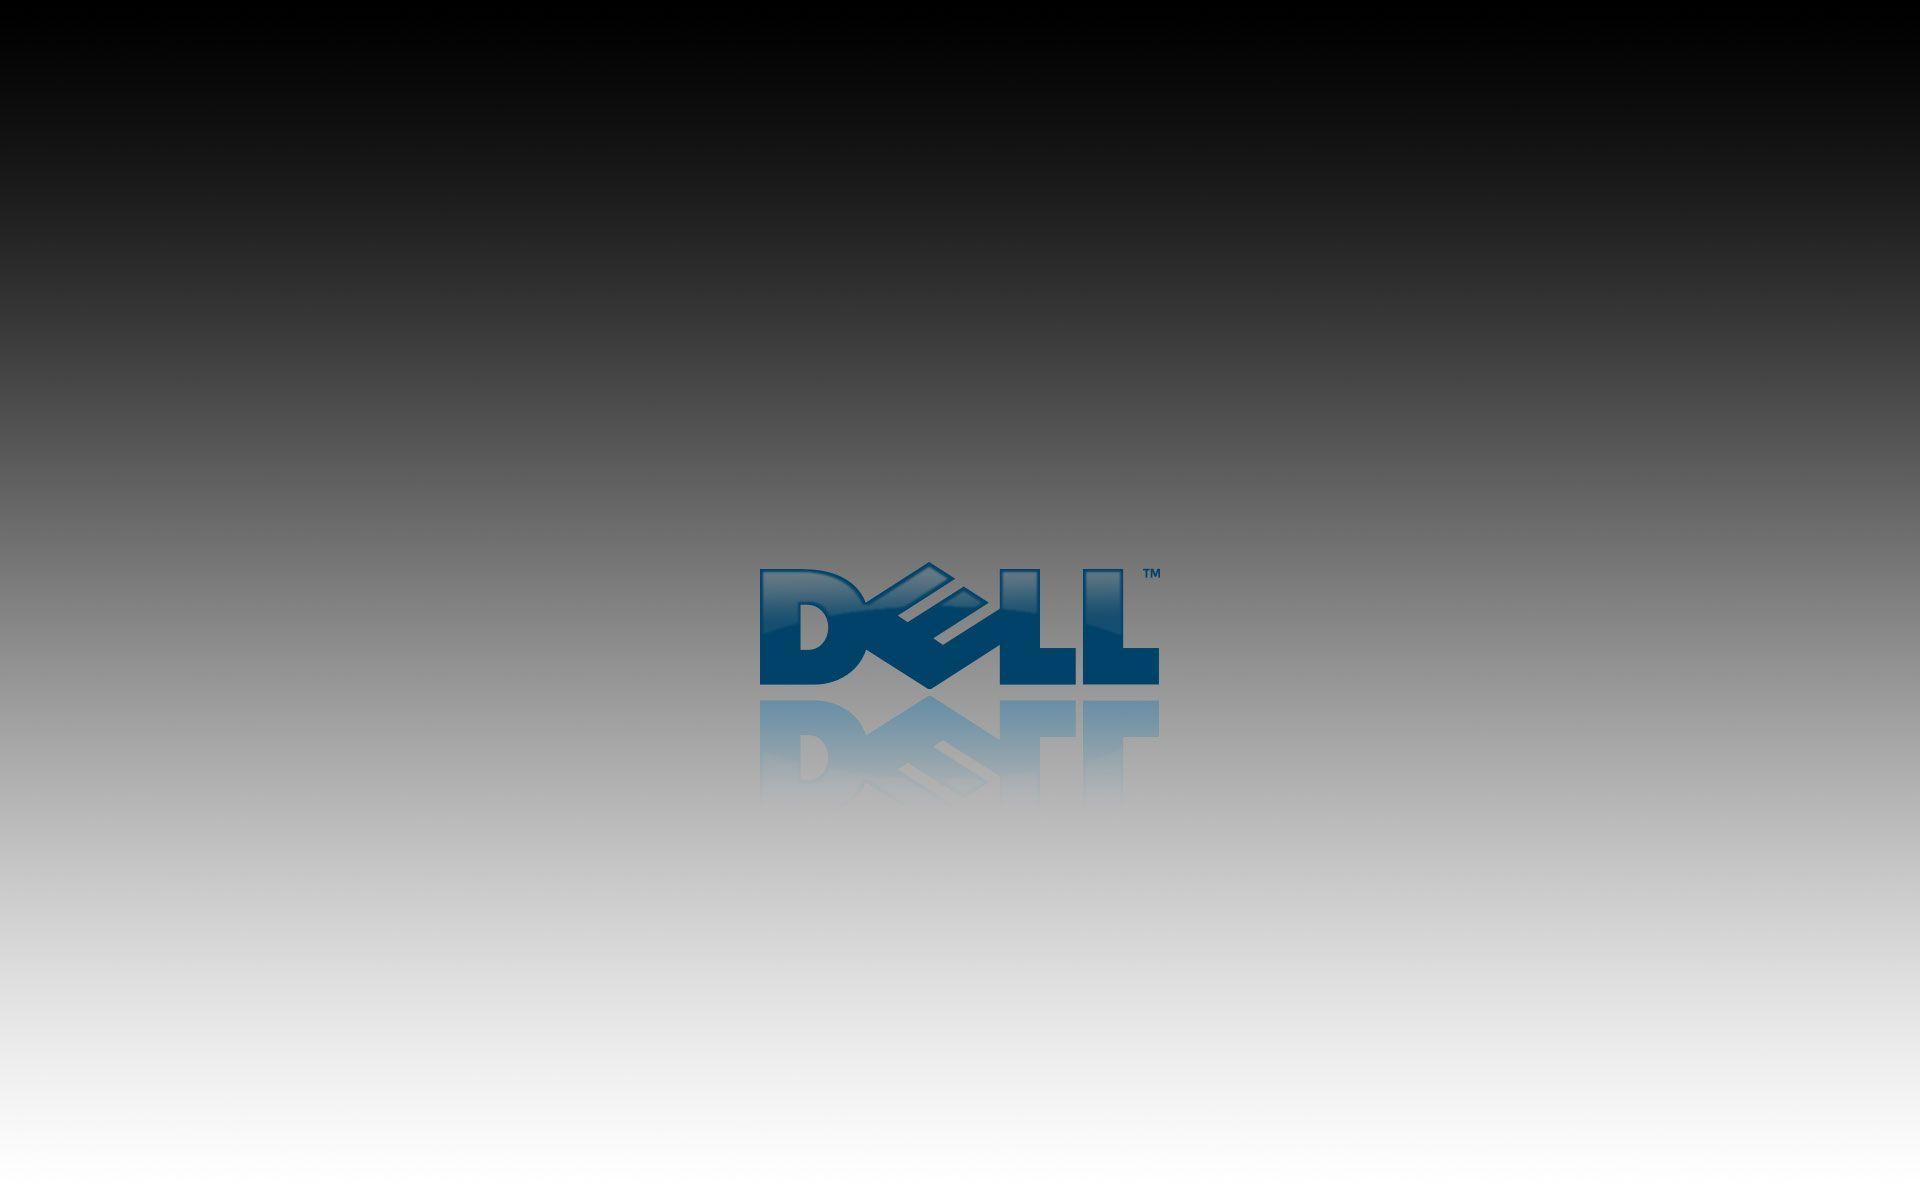 Dell Wallpaper 4146 Desktop Background. Areahd